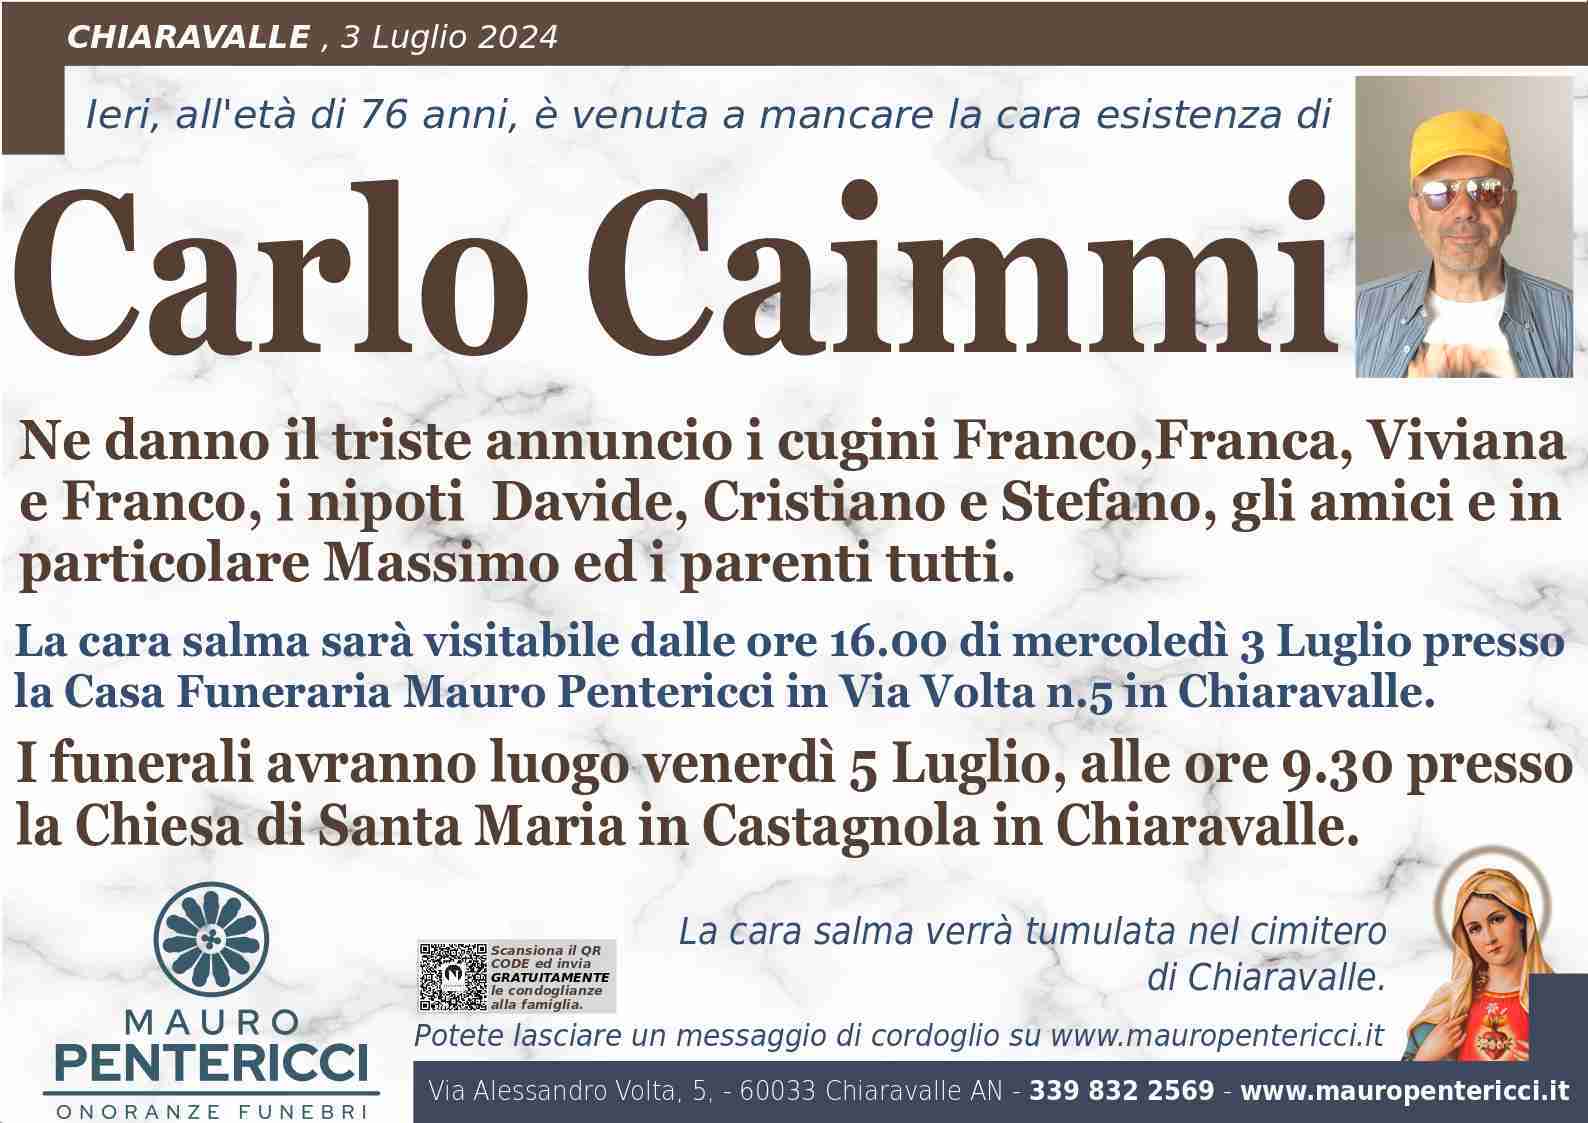 Carlo Caimmi